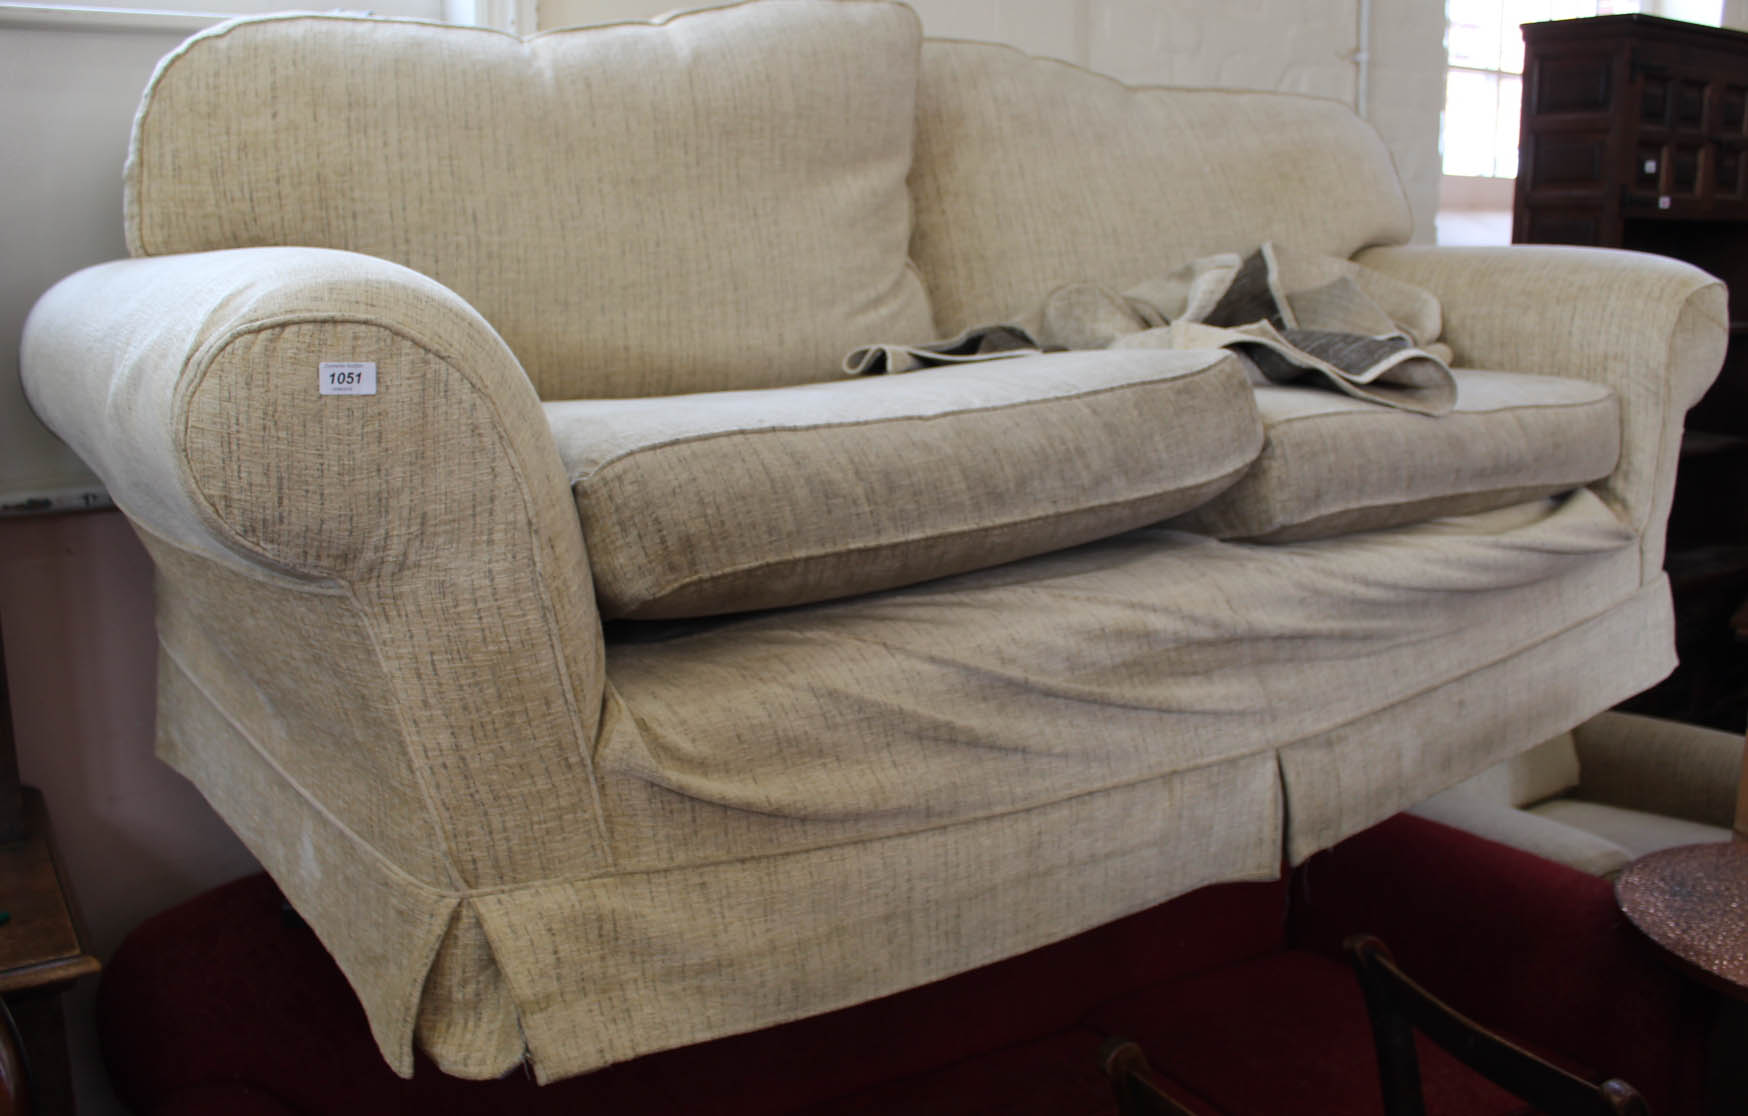 A modern Multiyork three seater sofa with cream upholstery plus a single chair of same design